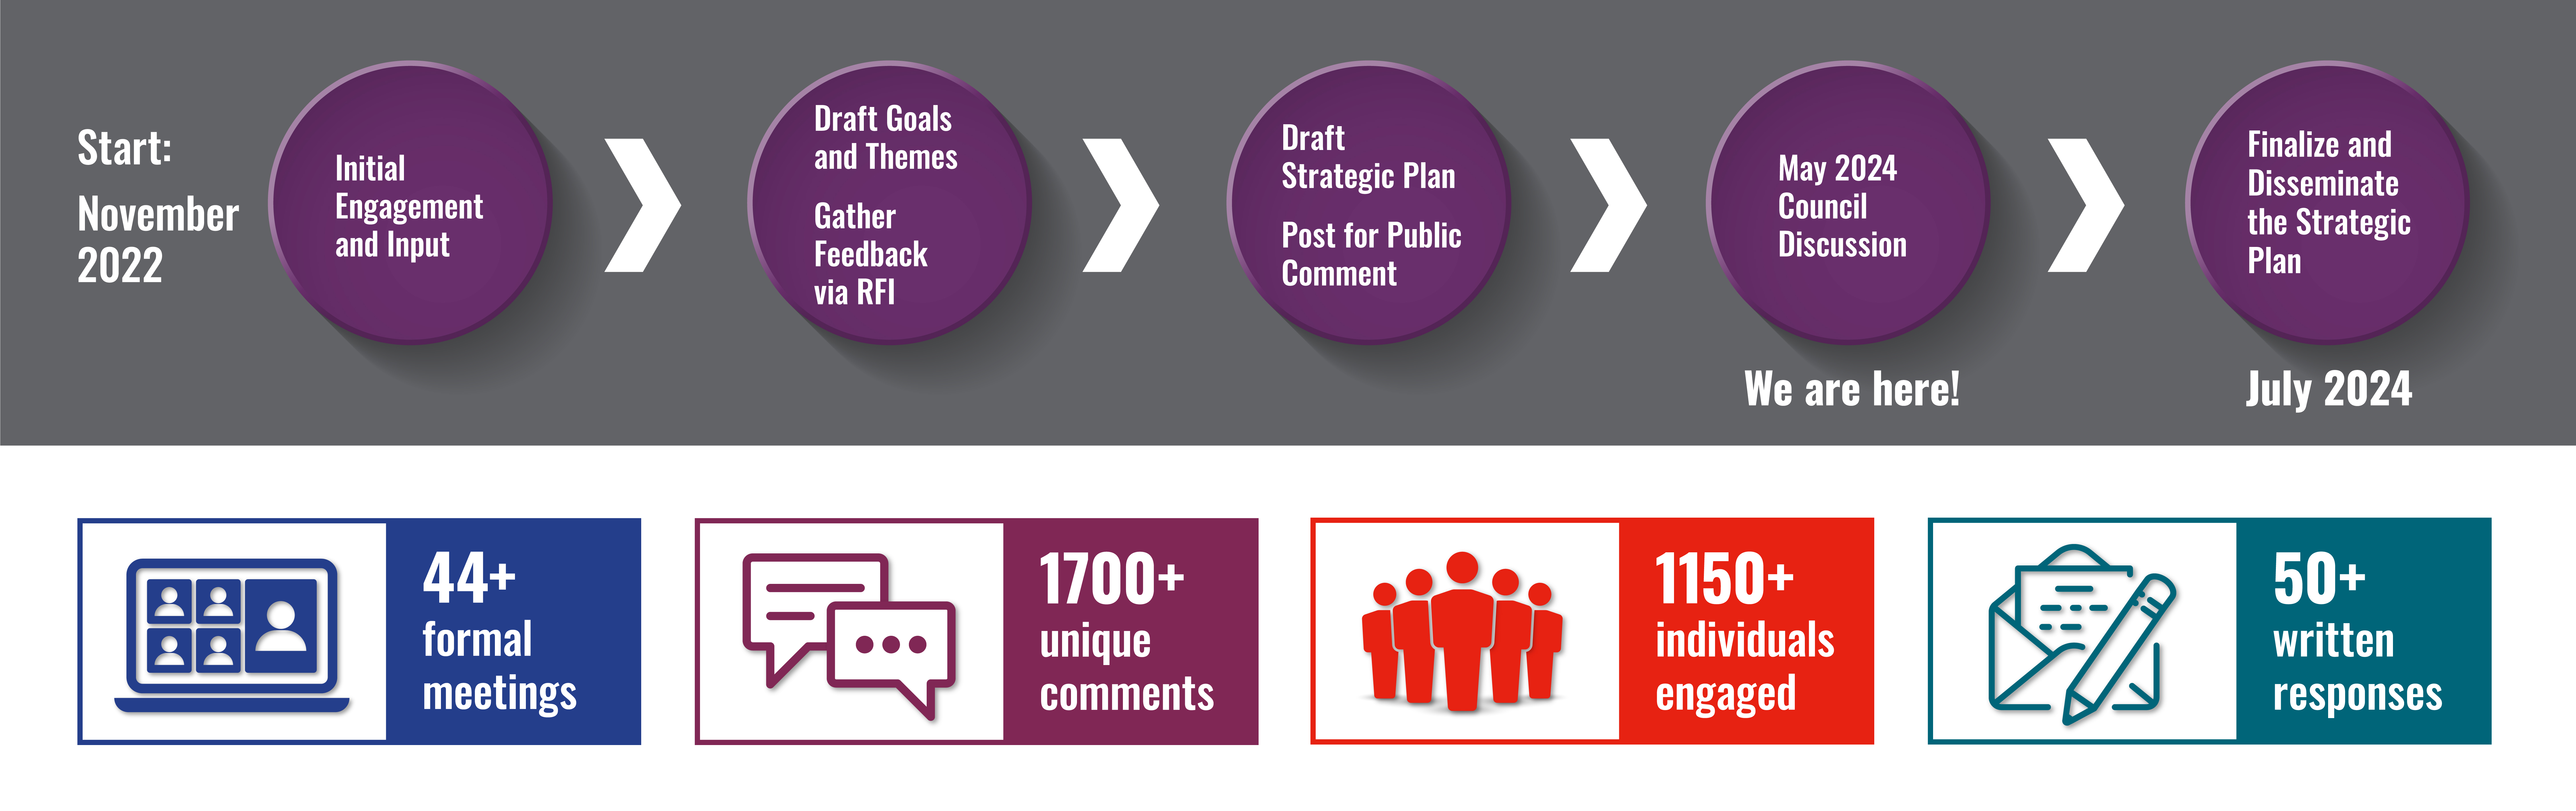 NCATS Strategic Plan Timeline from 2022-2024